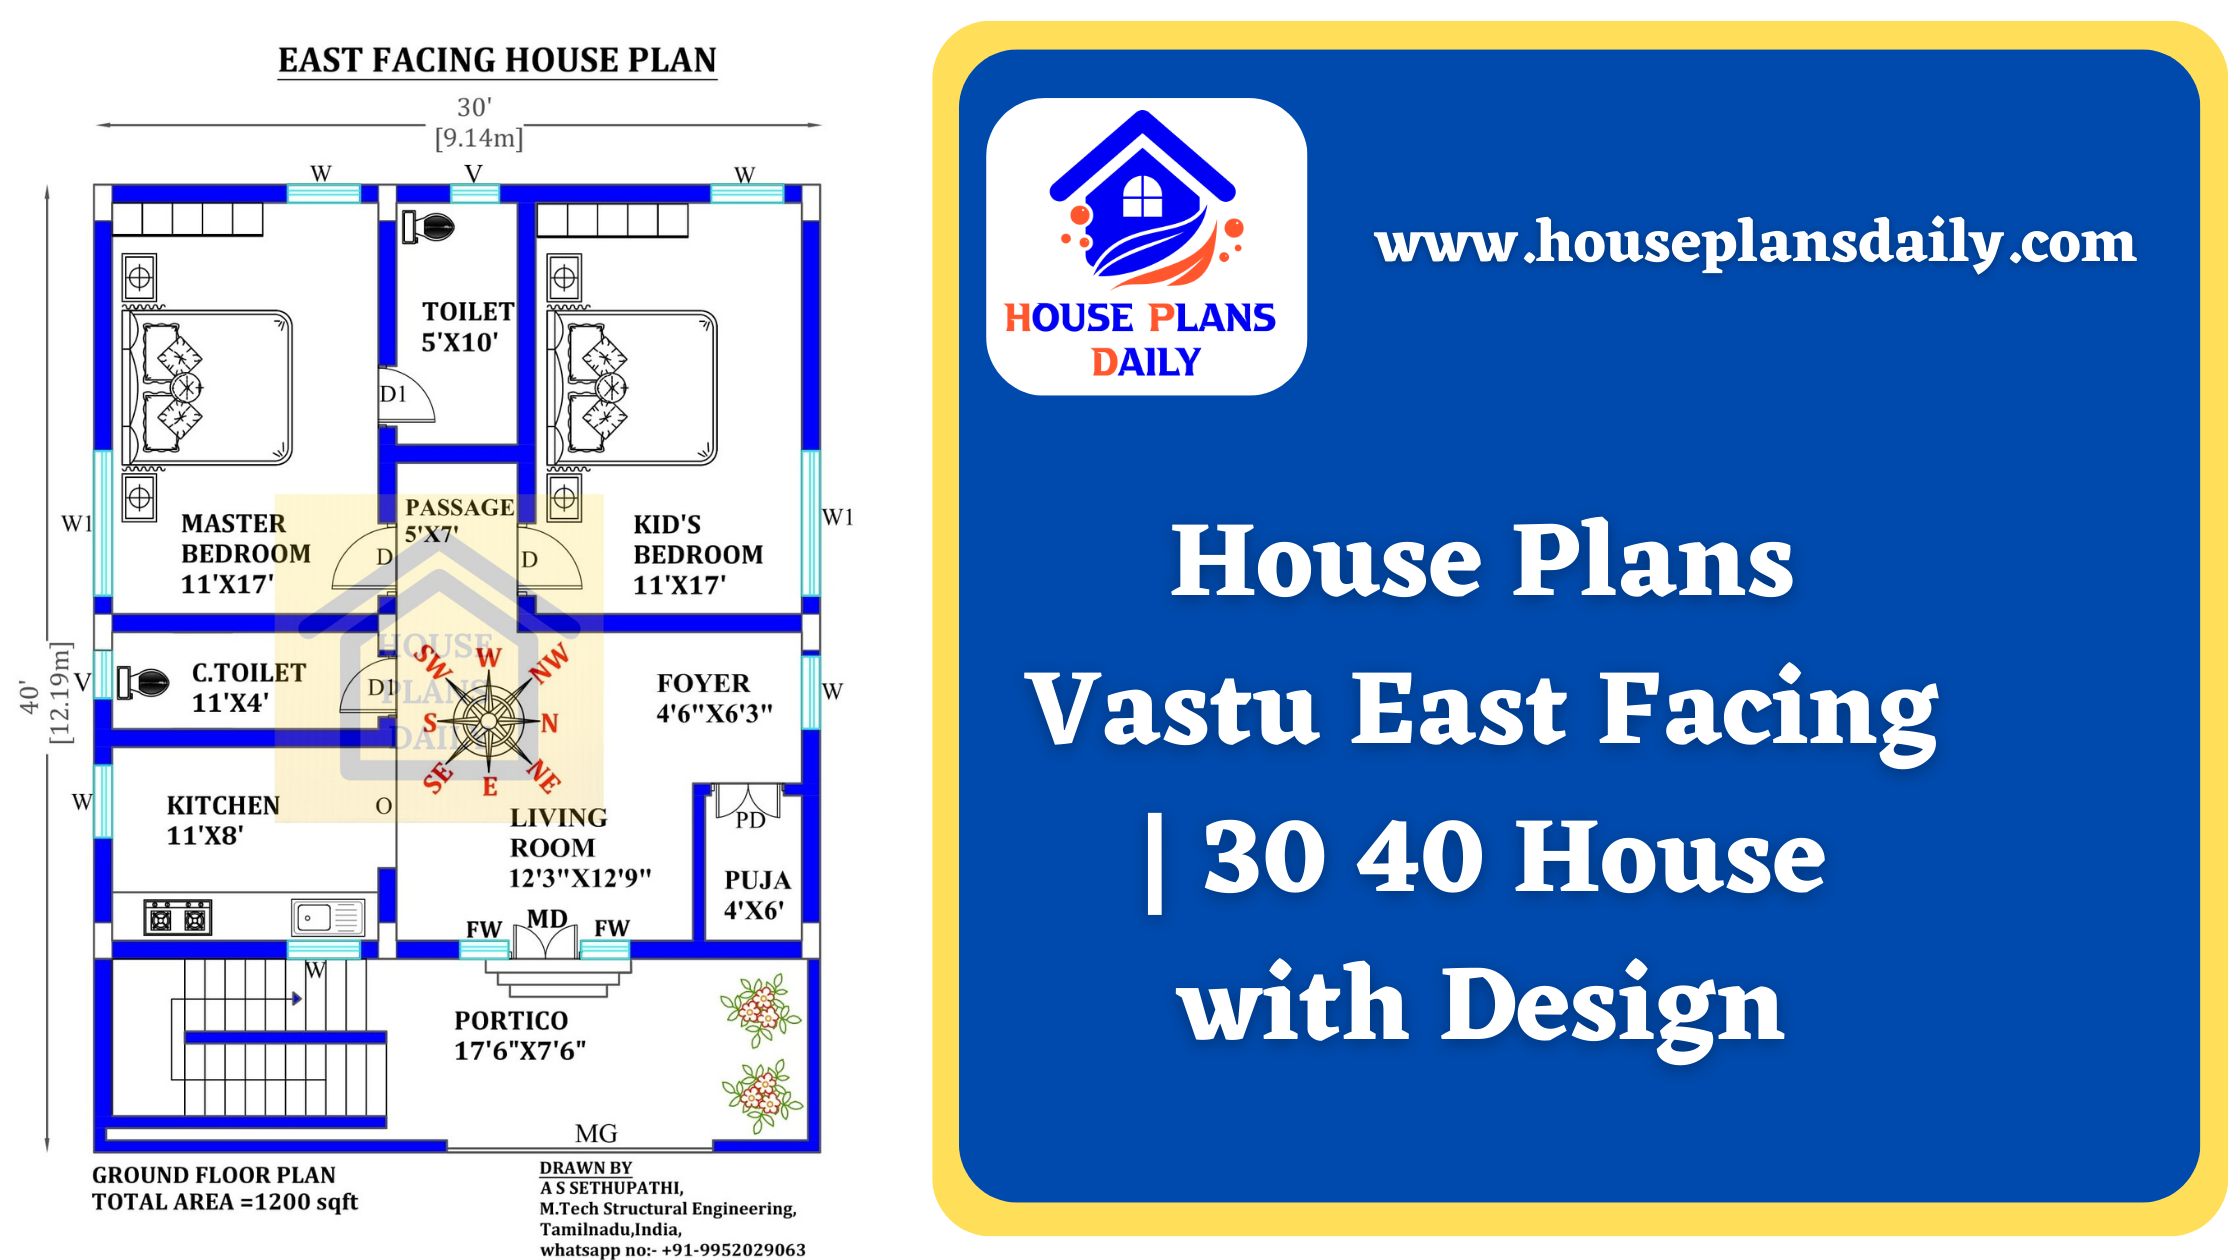 House Plans Vastu East Facing | 30 40 House with Design